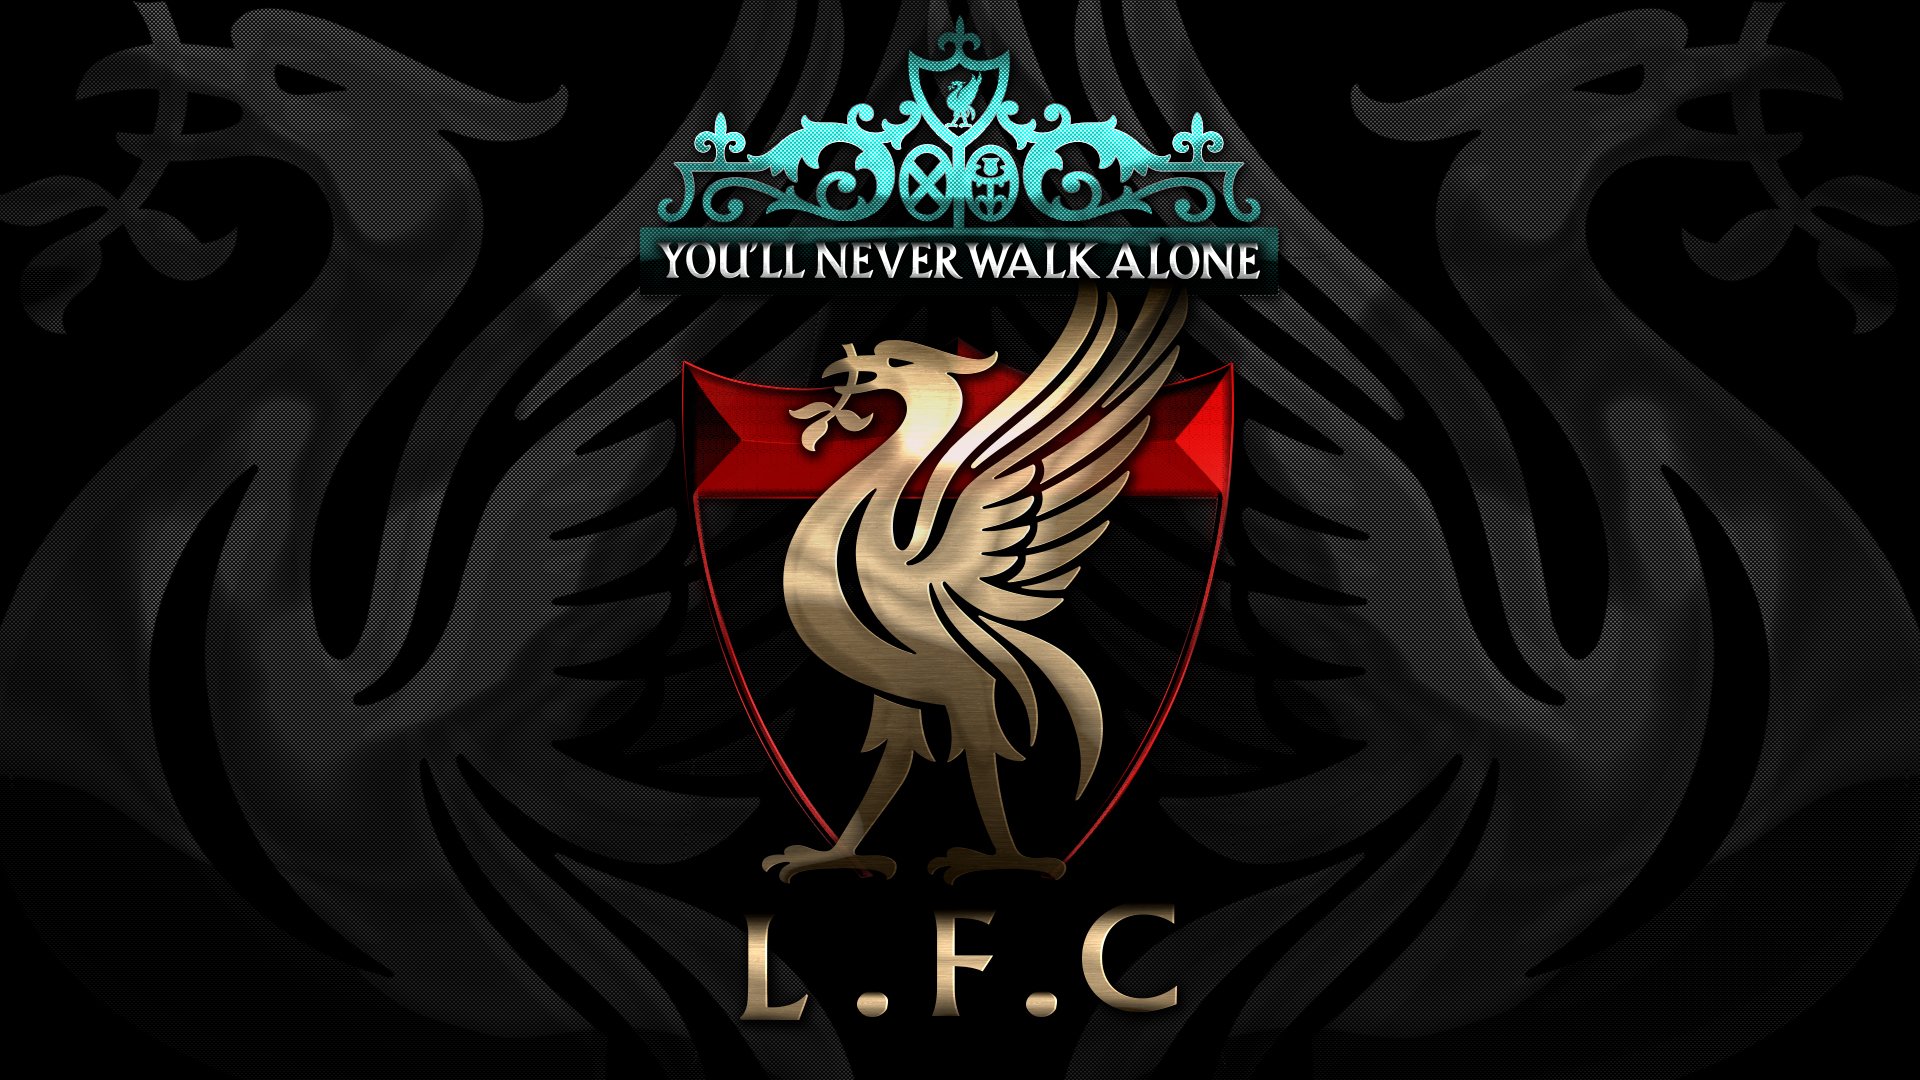 Liverpool FC The Red Warriors YNWA by Sreefu 1920x1080